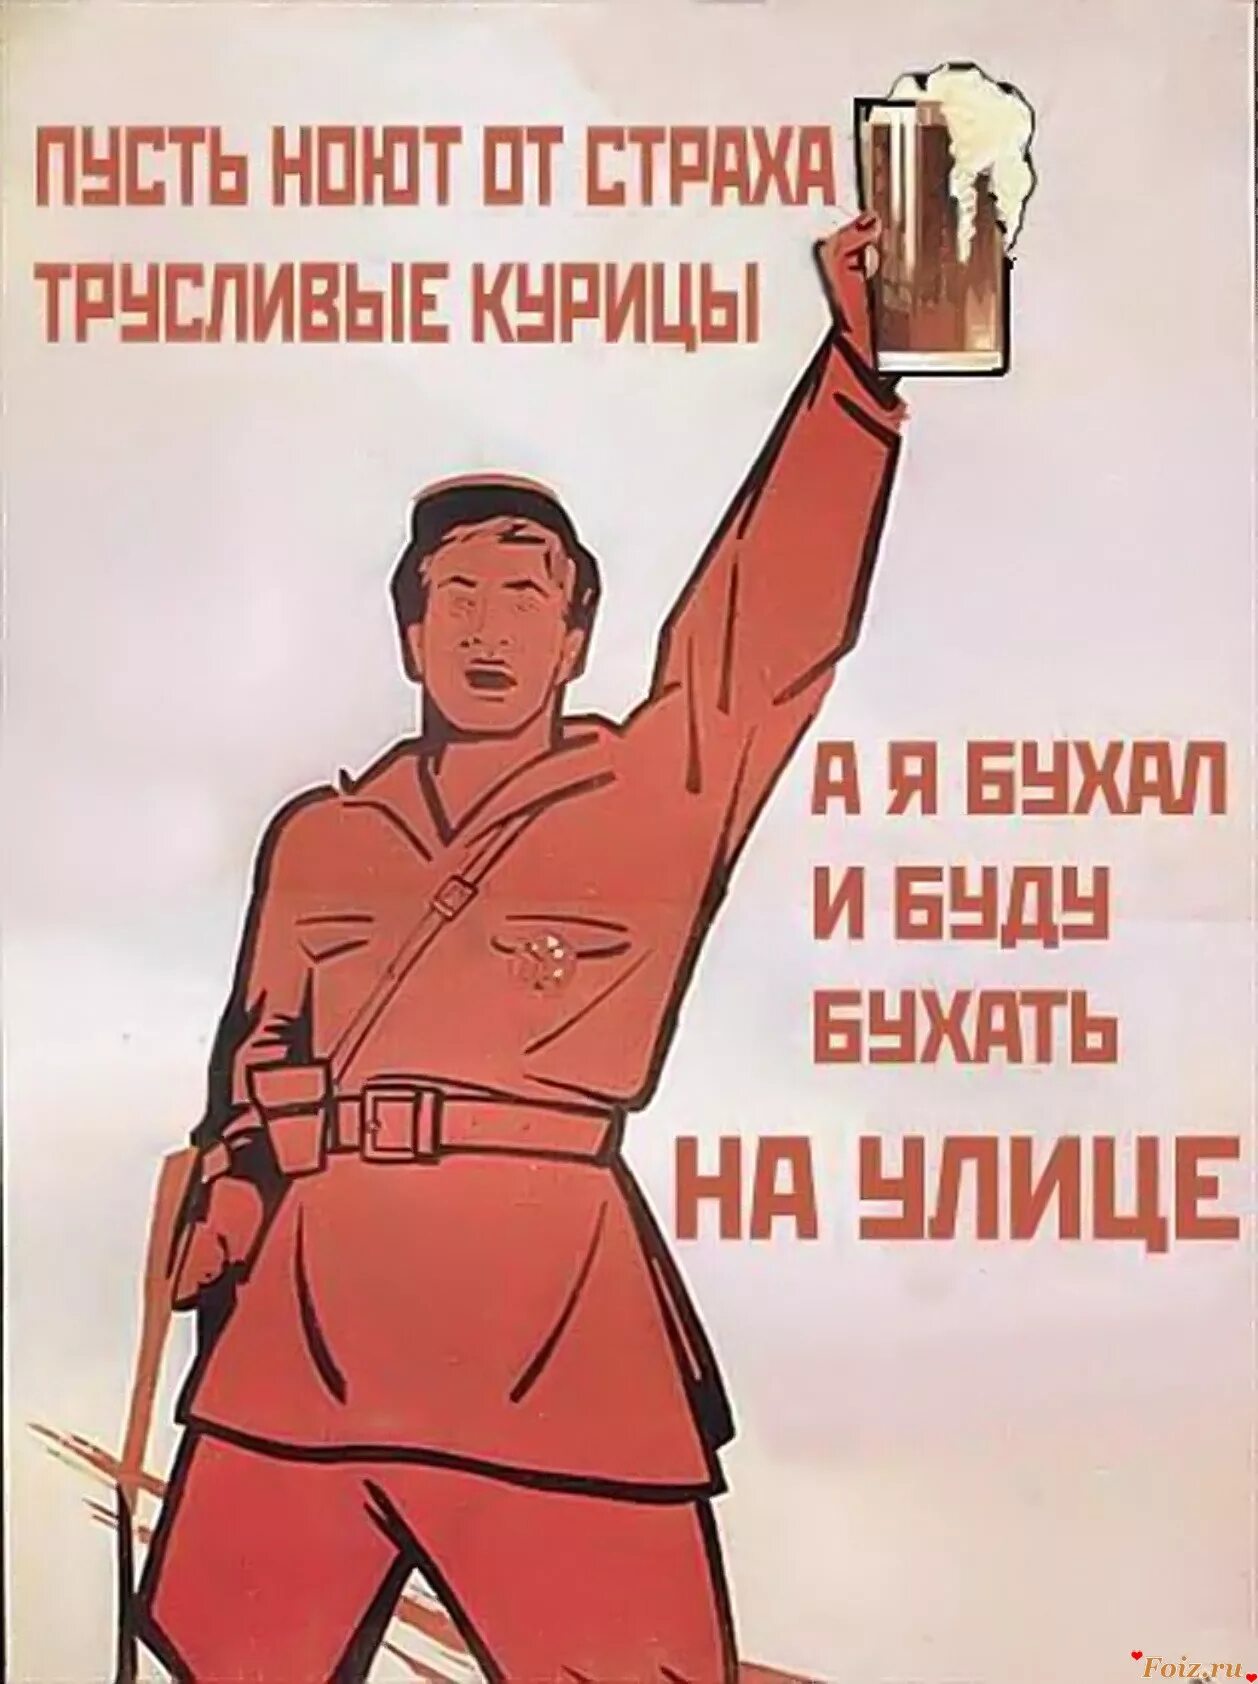 Прикольные плакаты. Советские плакаты. Плакаты с лозунгами. Прикольные советские плакаты.